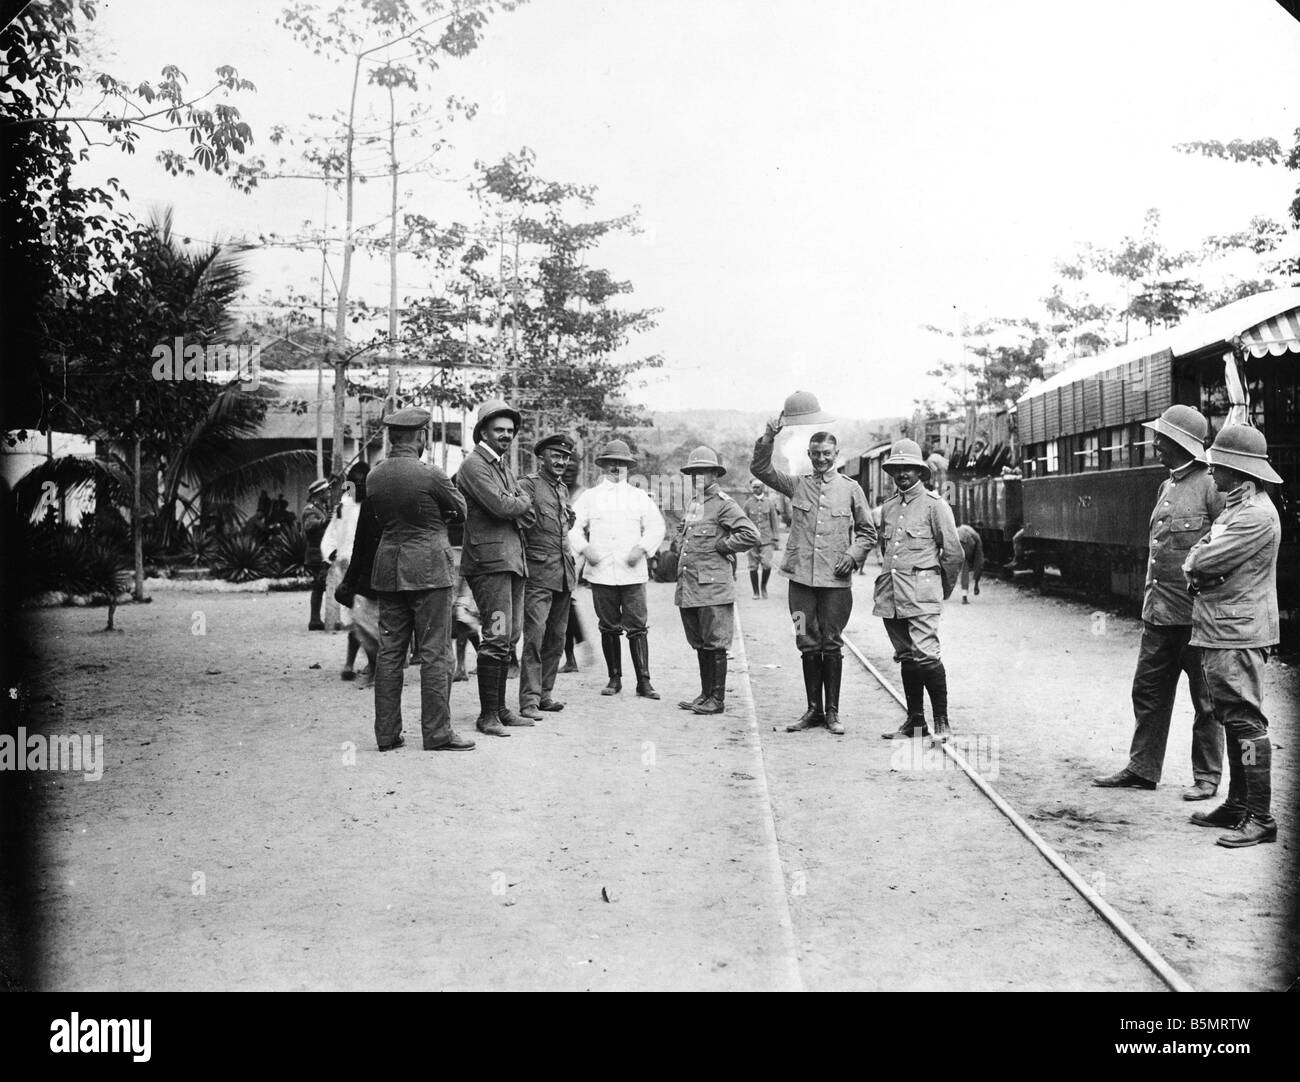 9AF 1914 0 0 A4 3 Stationen in Deutsch-Ostafrika Foto Weltkrieg Krieg in den Kolonien Deutsch-Ostafrika, heute Tansania Soldaten Stockfoto